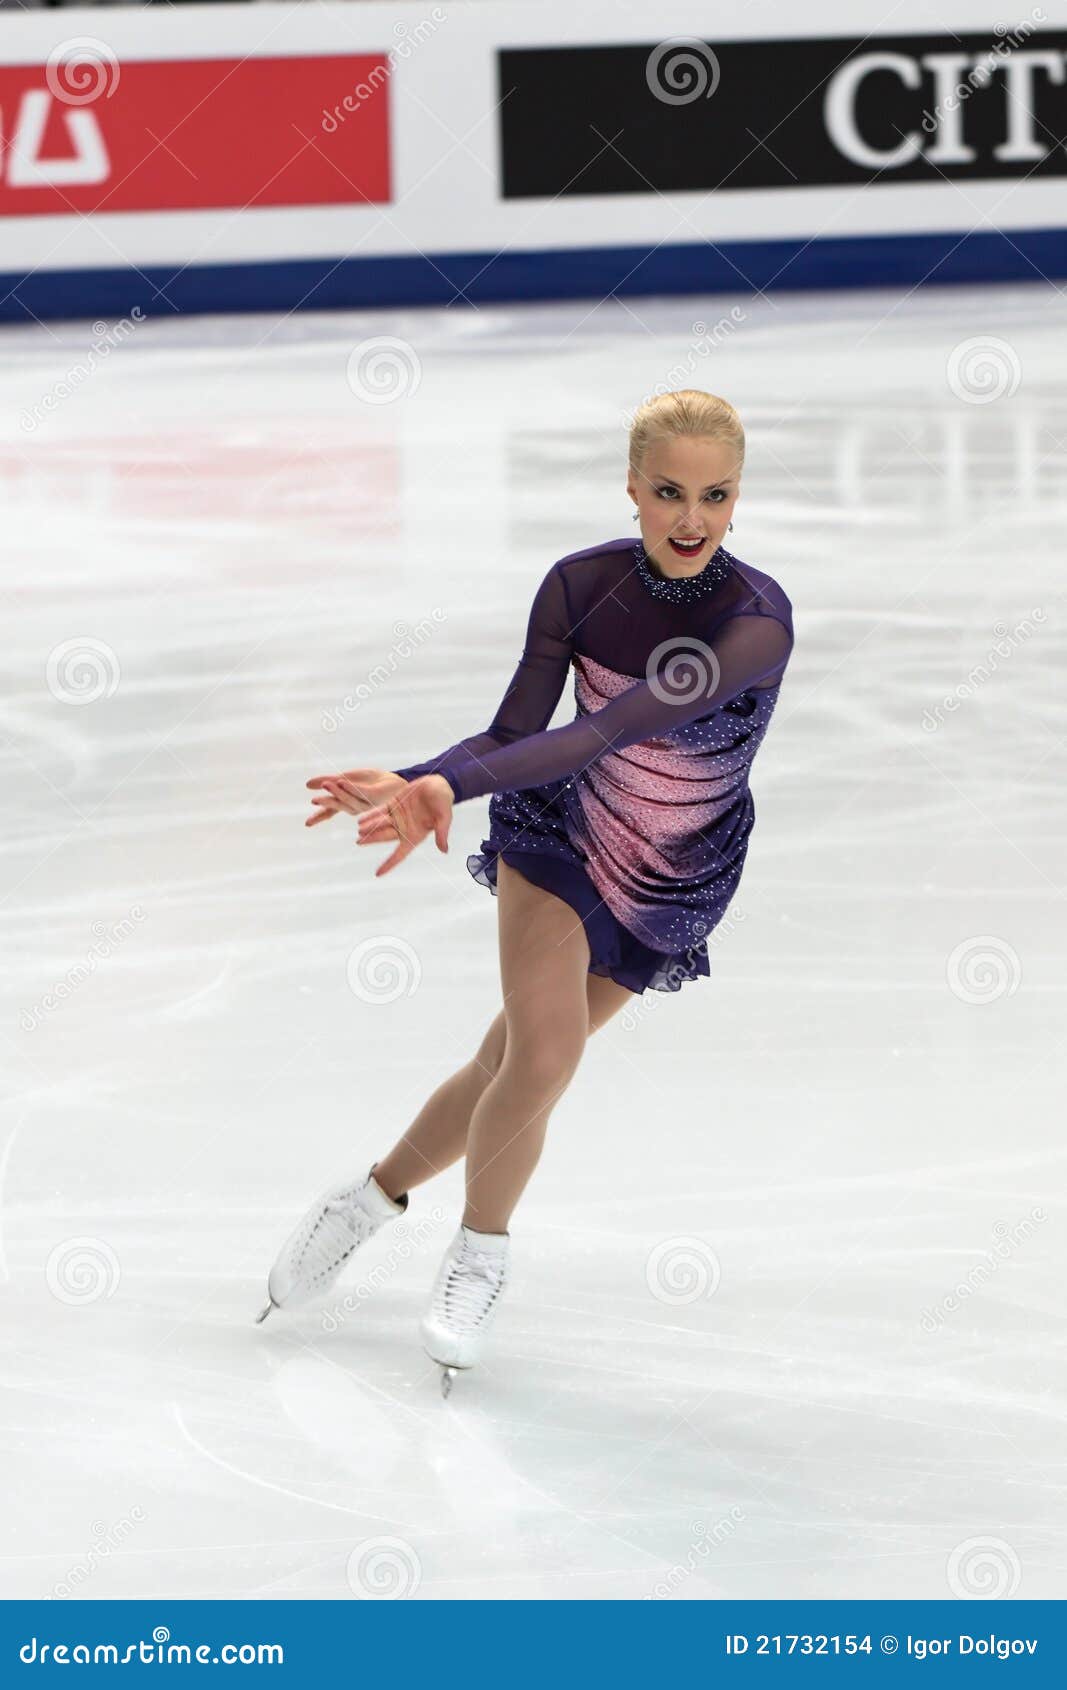  - kiira-linda-katriina-korpi-finnish-figure-skater-21732154